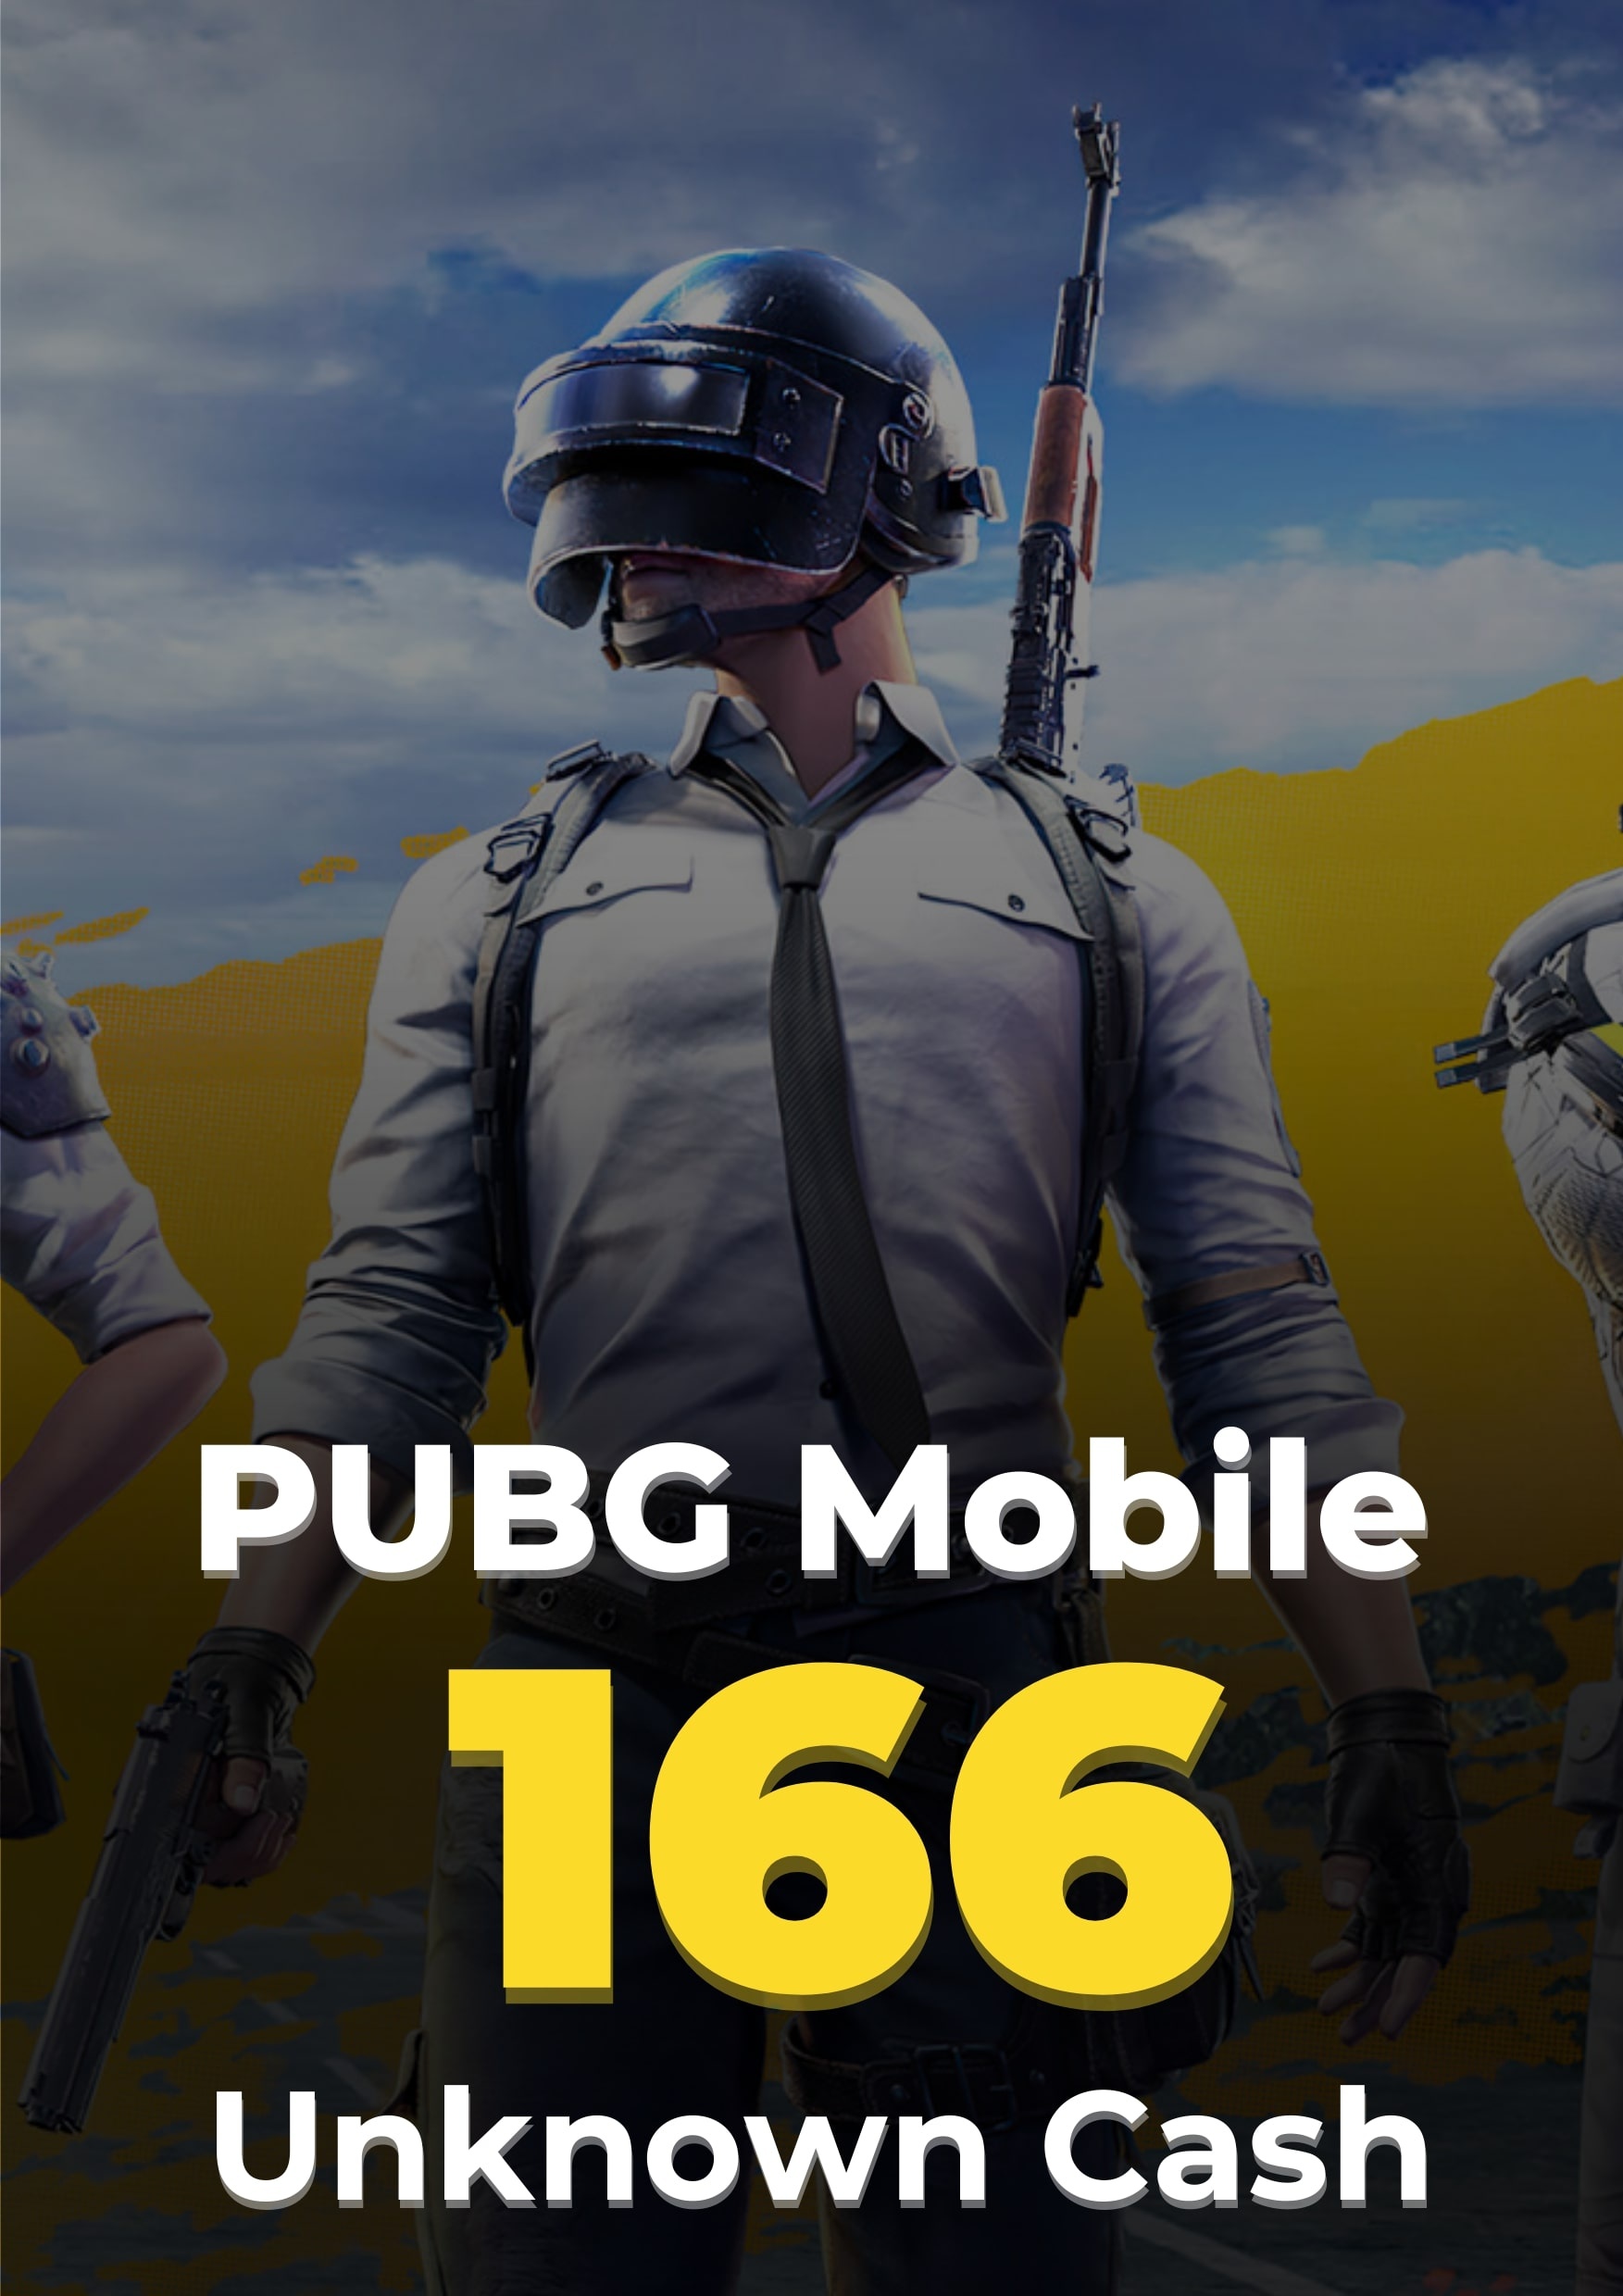 PUBG Mobile 166 UC